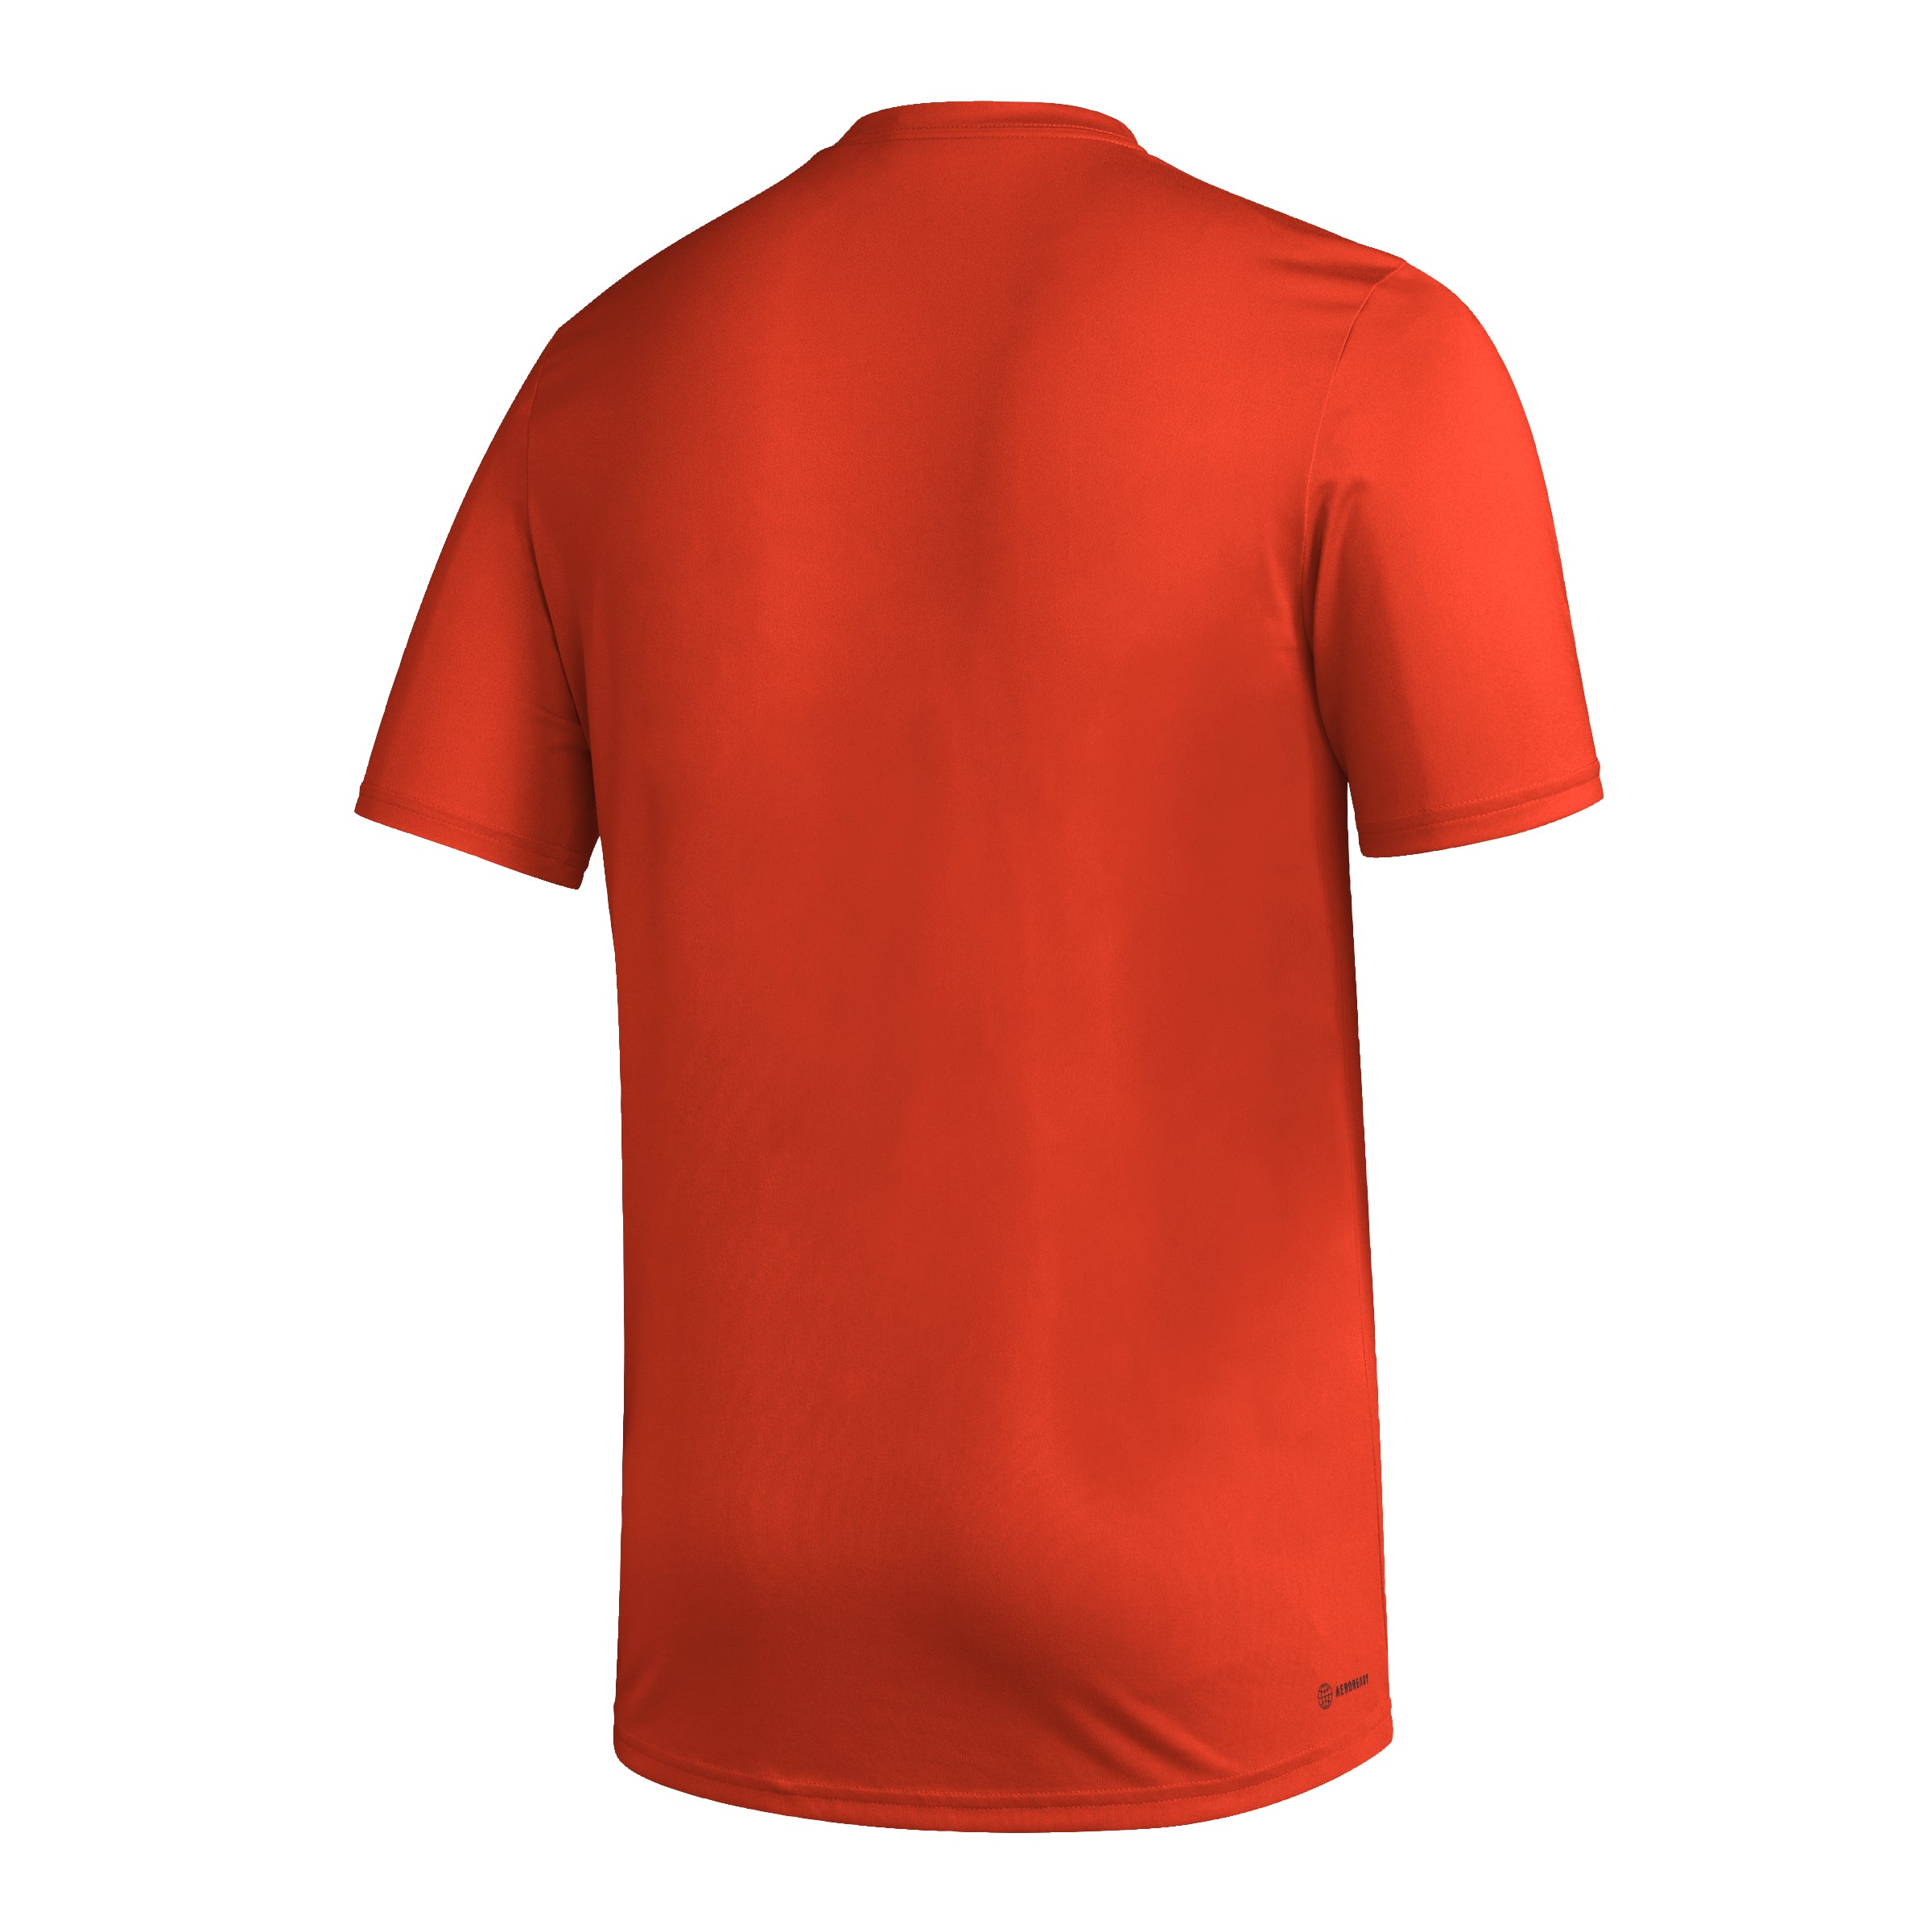 Miami Hurricanes adidas Aeroready Pregame Issued By T-Shirt - Orange